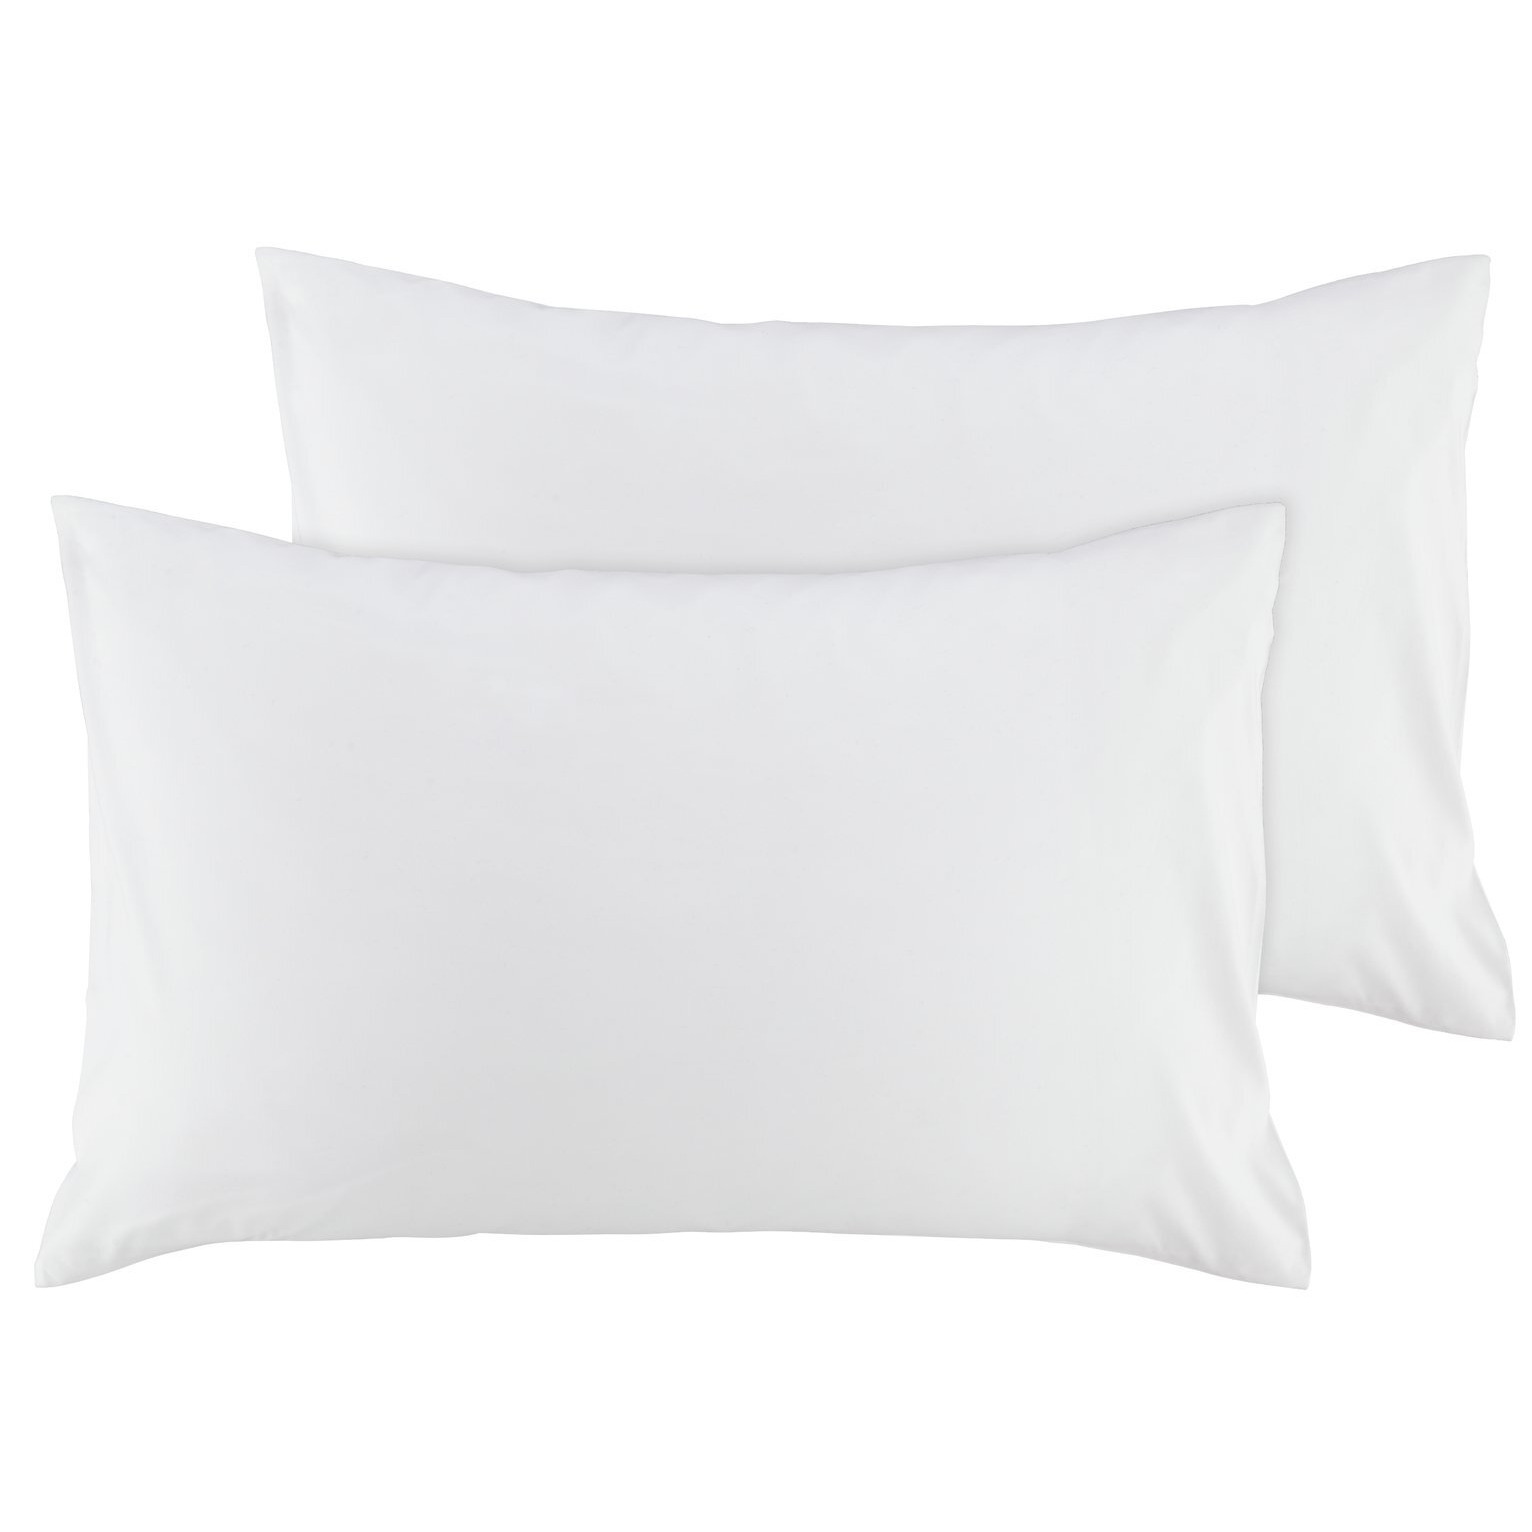 Silentnight Supersoft Standard Pillowcase Pair - White - image 1